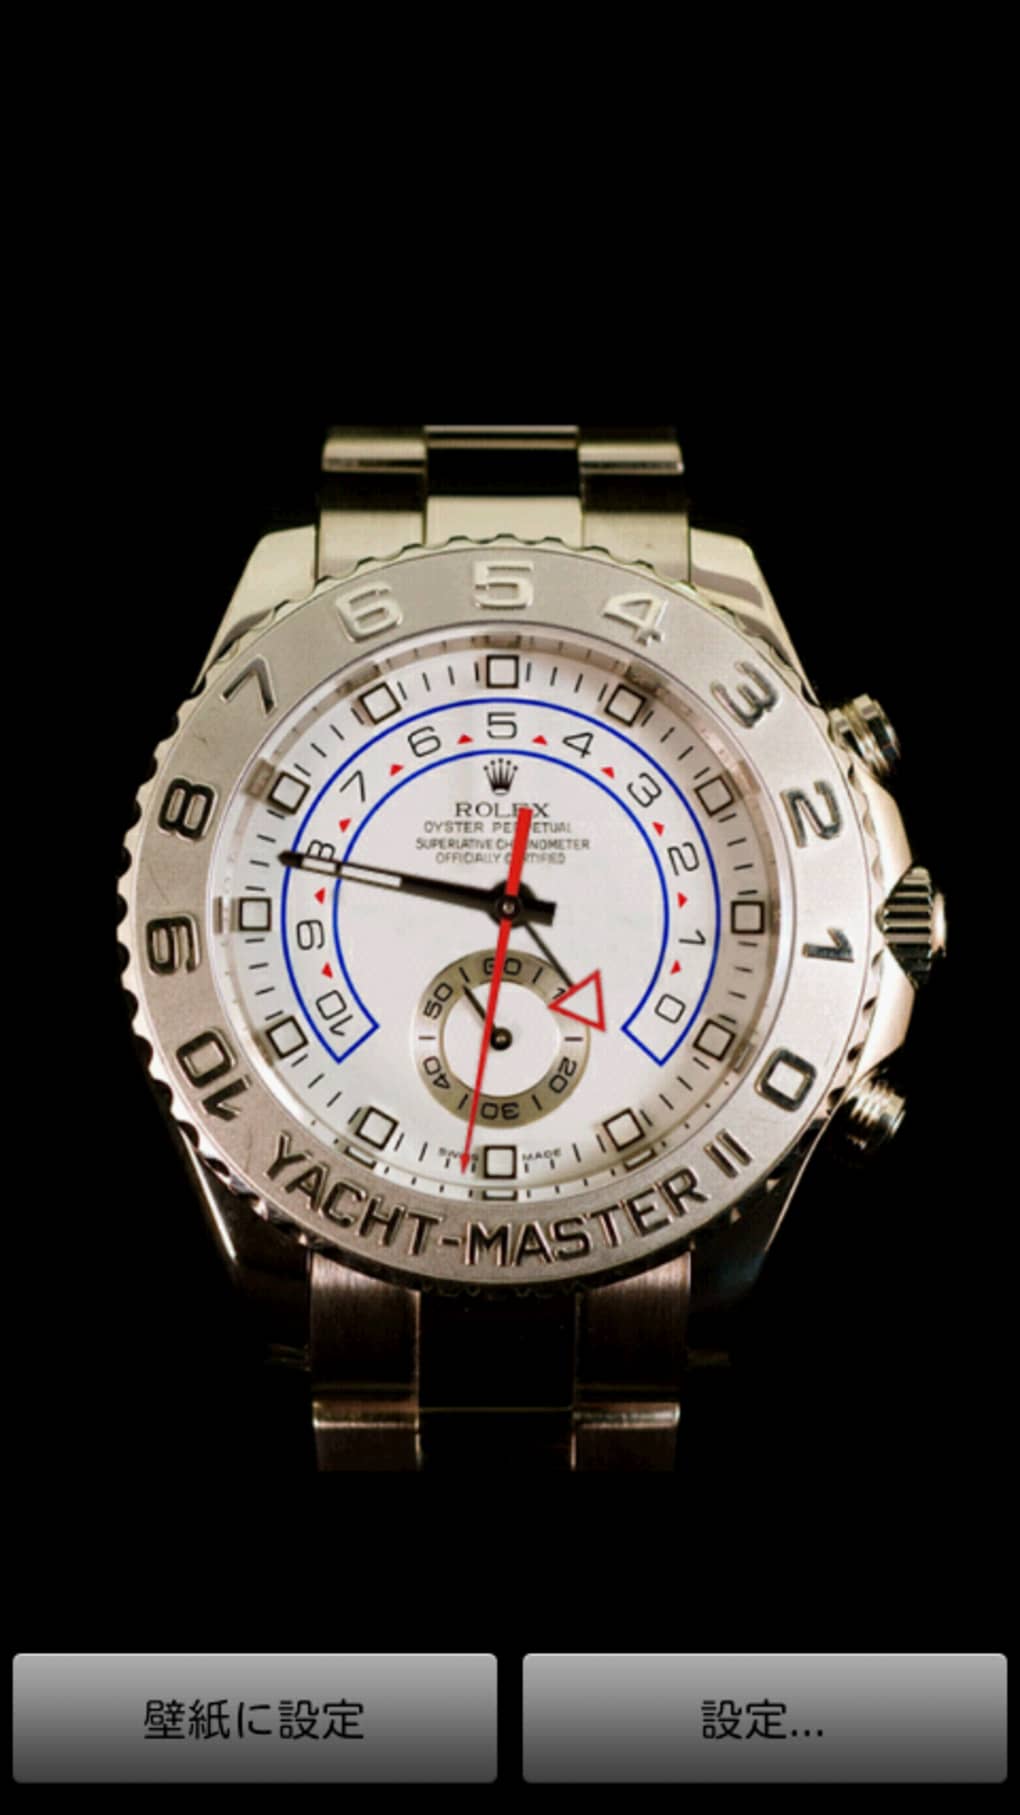 rolex watch live wallpaper,watch,analog watch,watch accessory,fashion accessory,jewellery